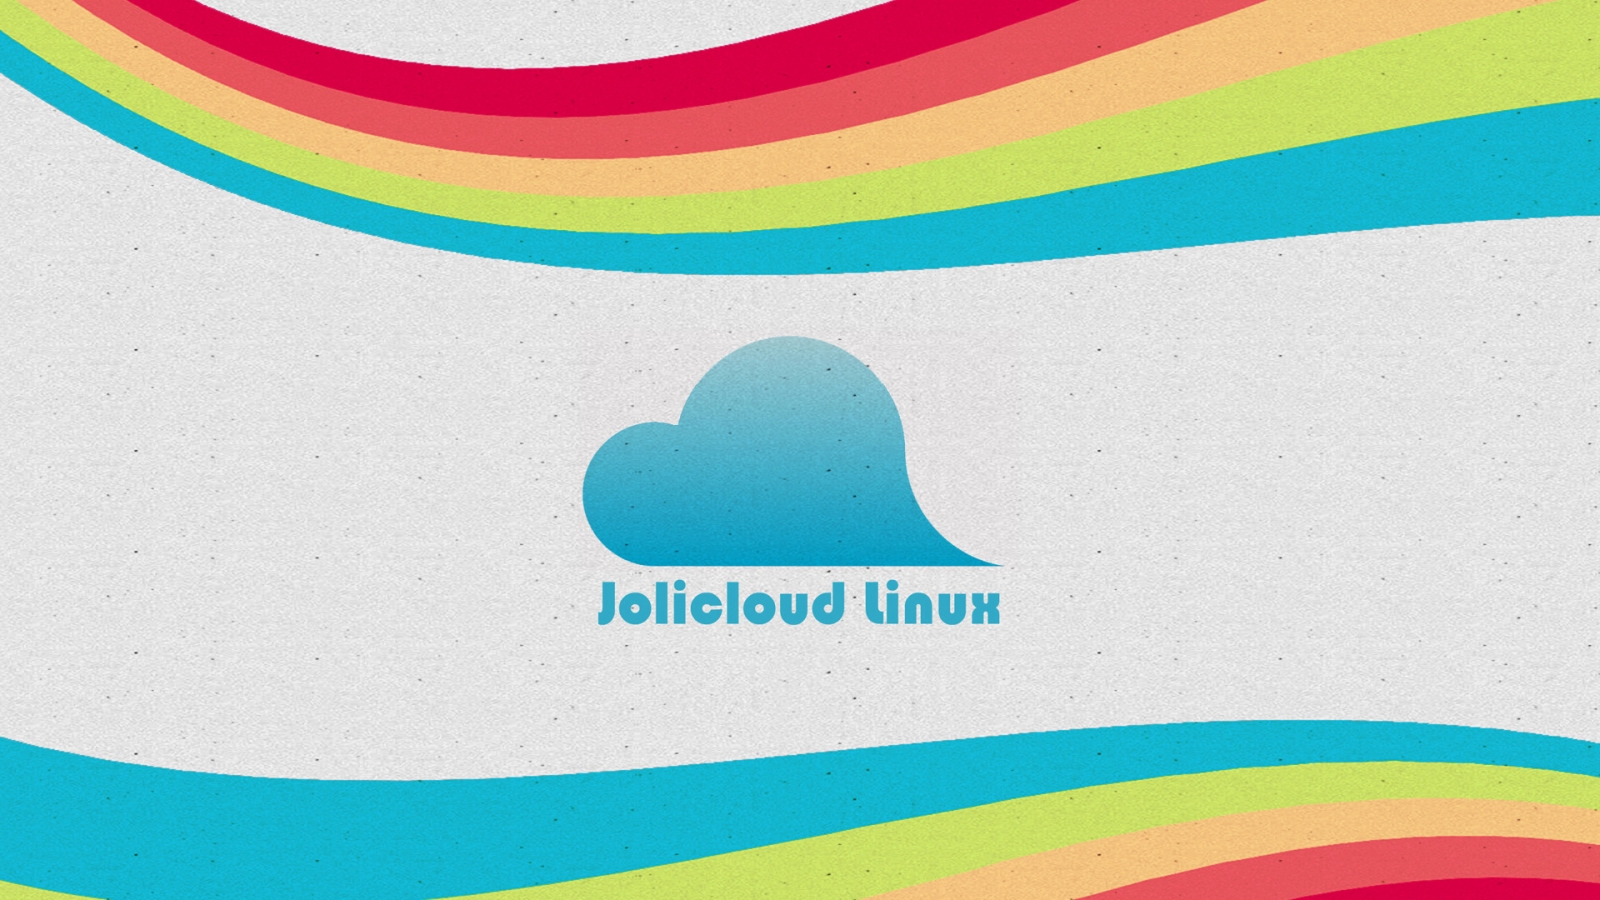 Jolicloud Linux for 1600 x 900 HDTV resolution